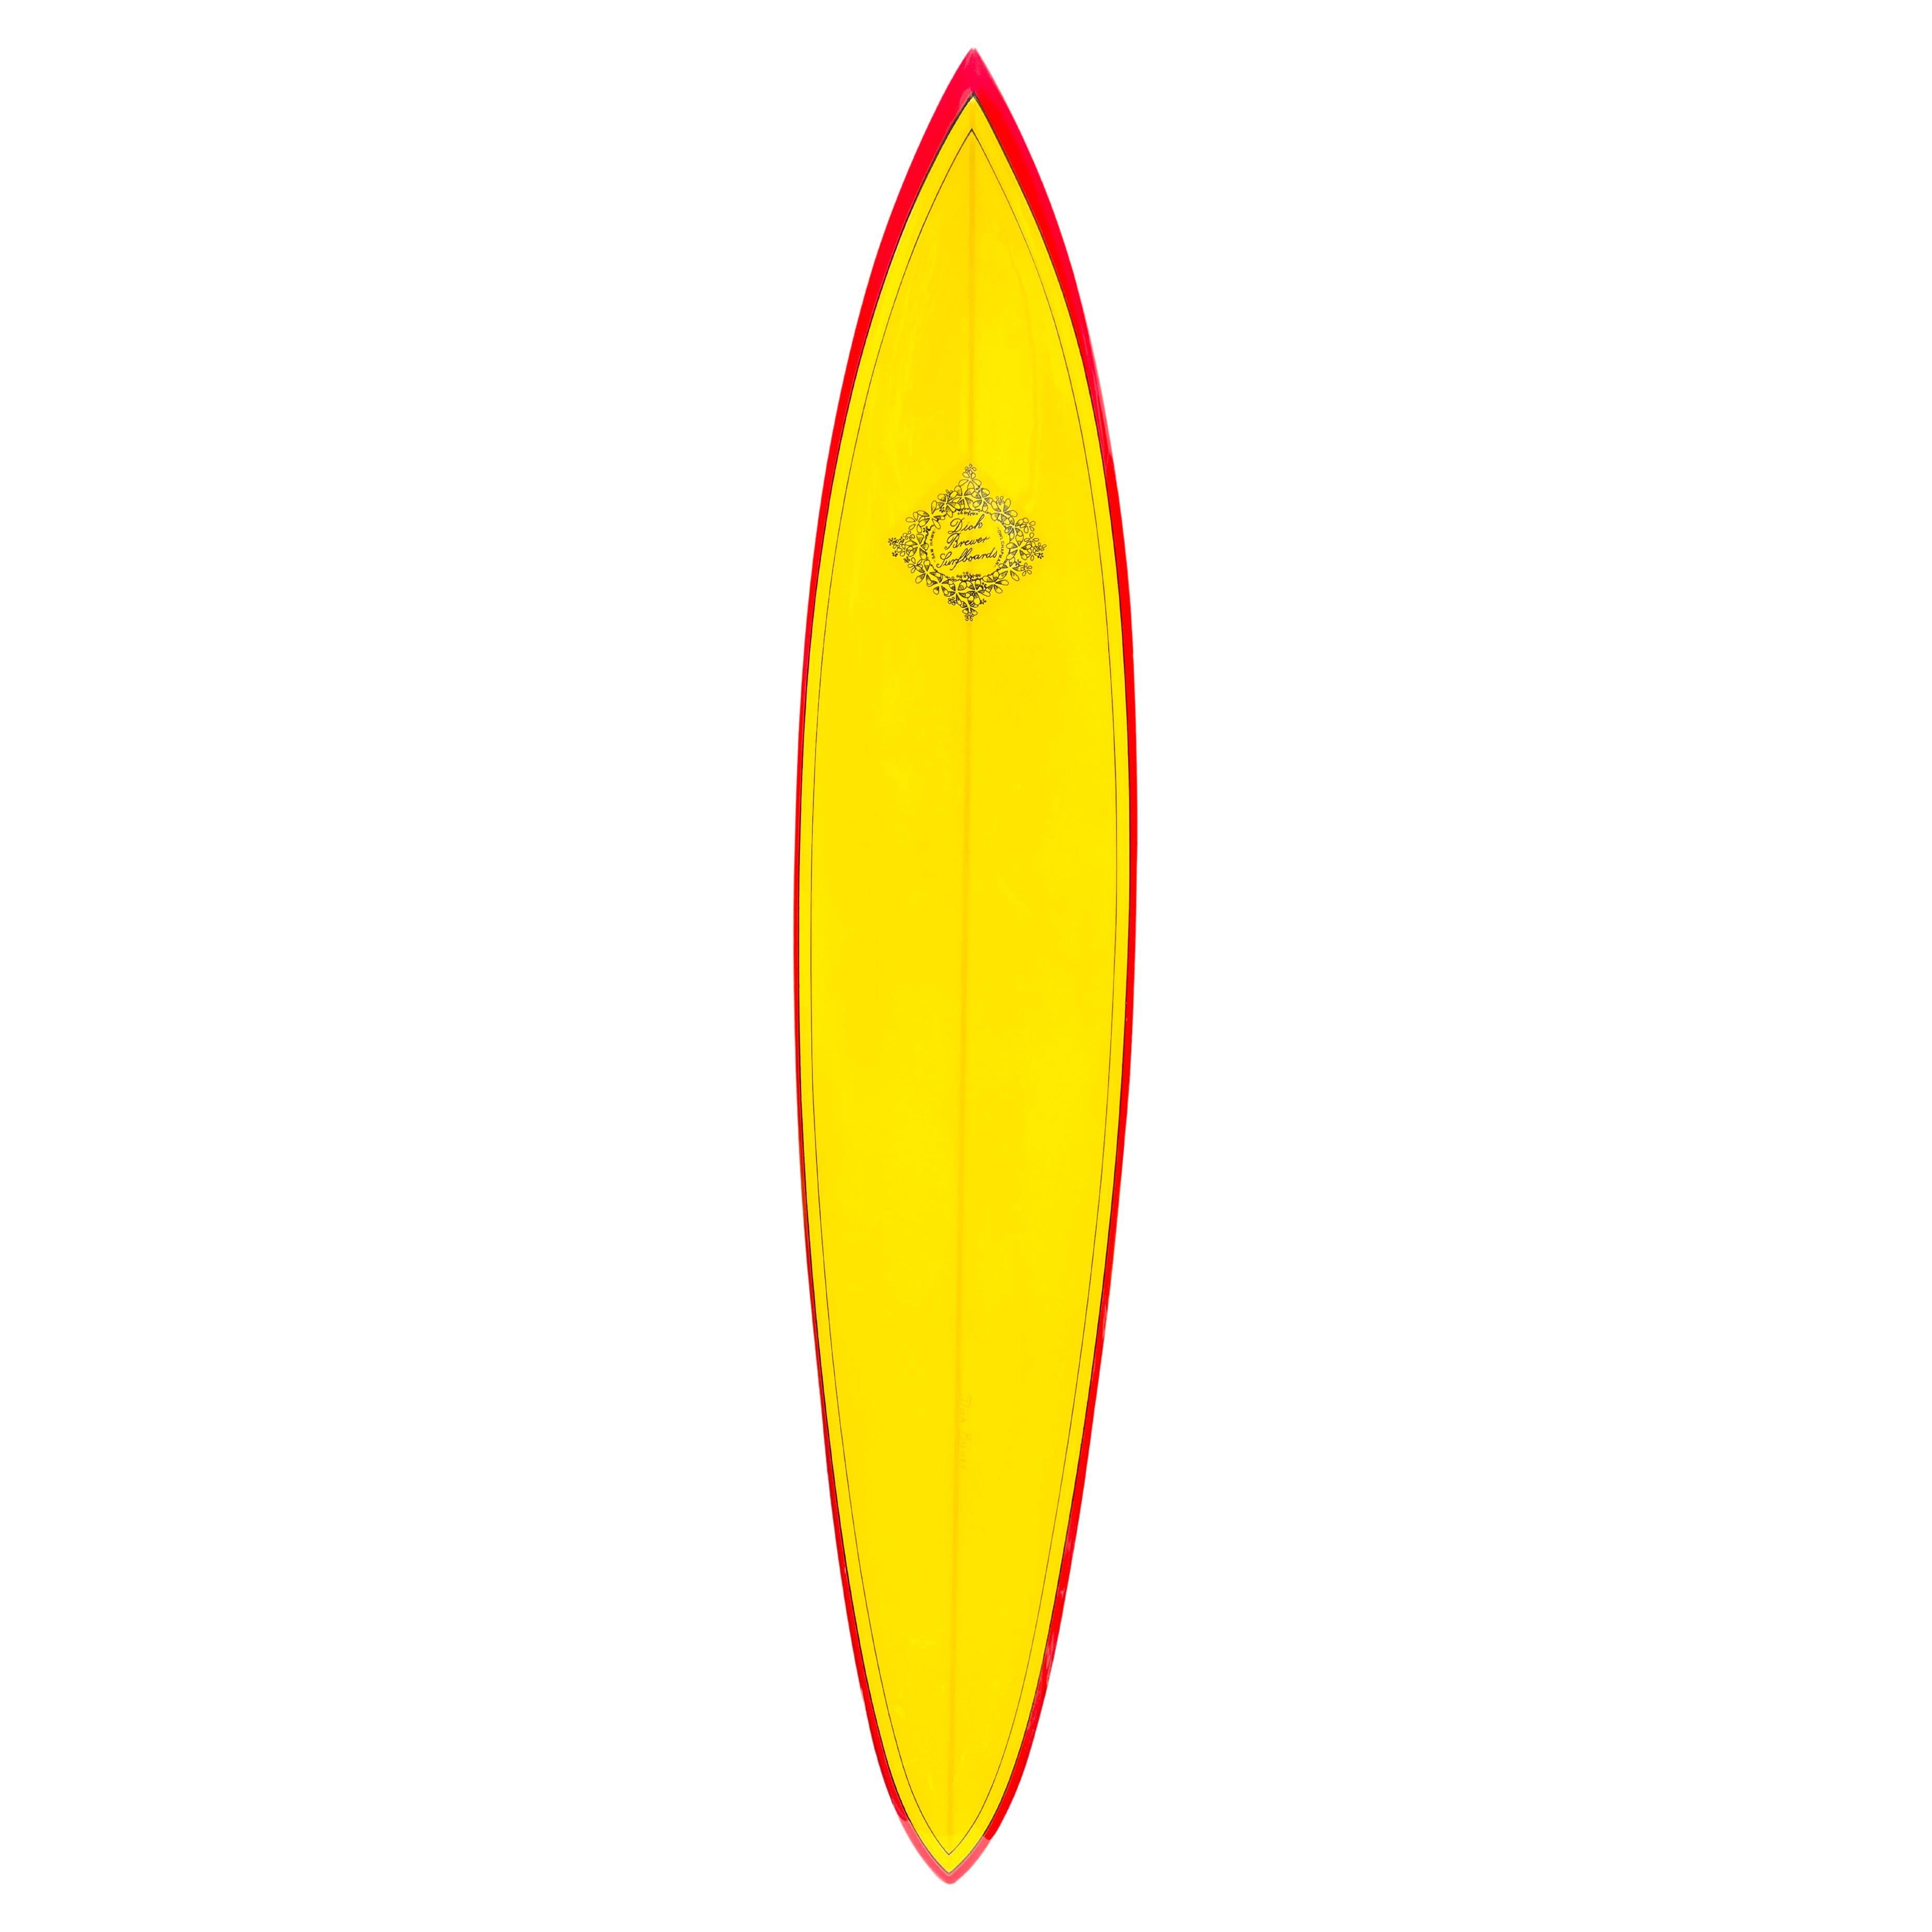 1968 Replica Lahaina Clinton Blears Modell Surfbrett von Dick Brewer